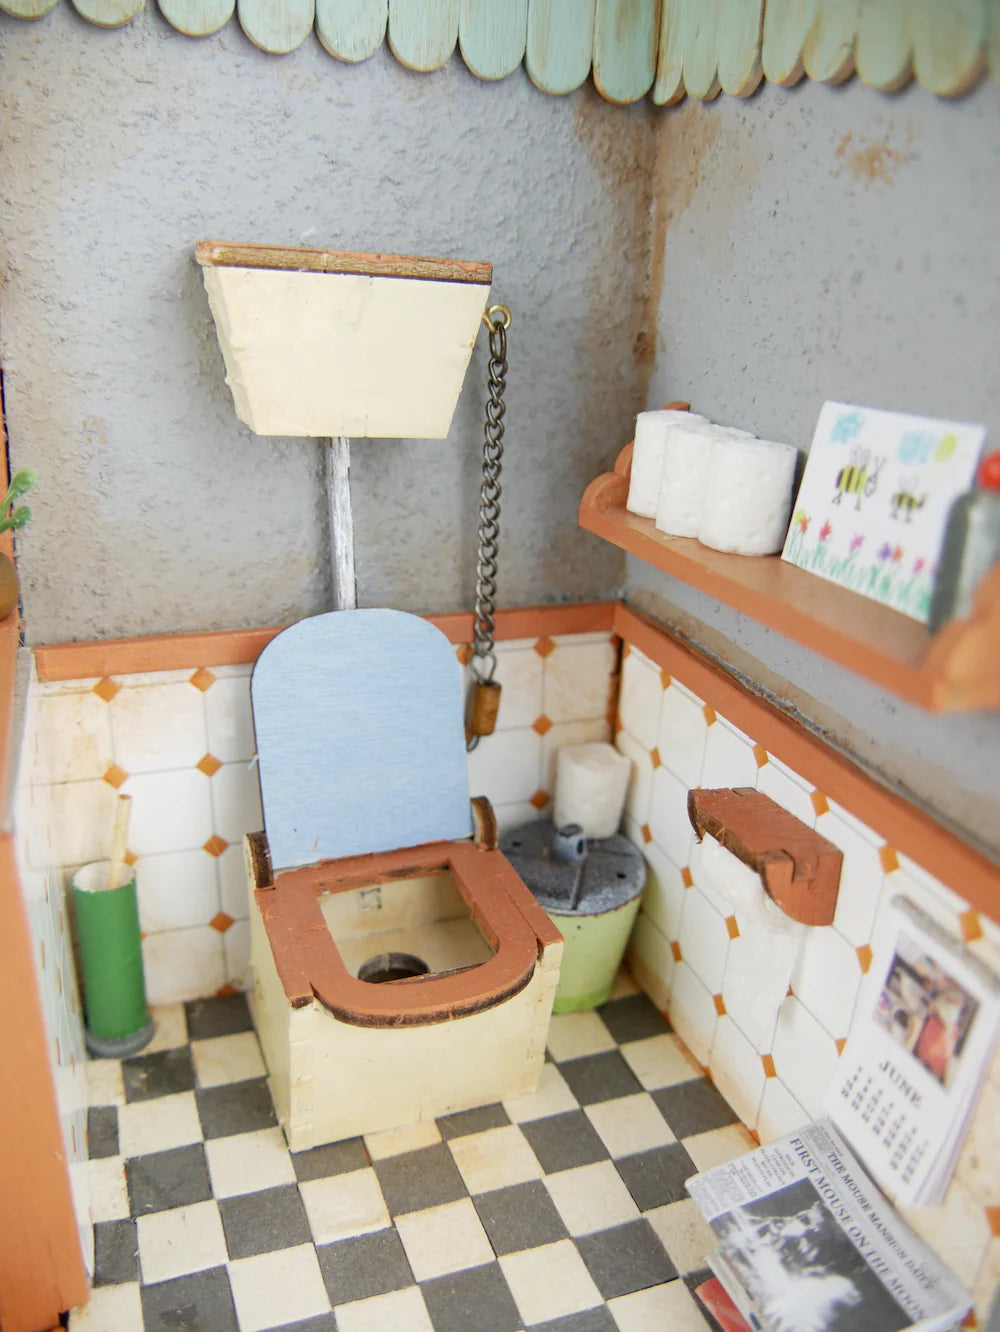 het muizenhuis meubelkit badkamer knutselen - ensemble de salle de bain kit pour assembler